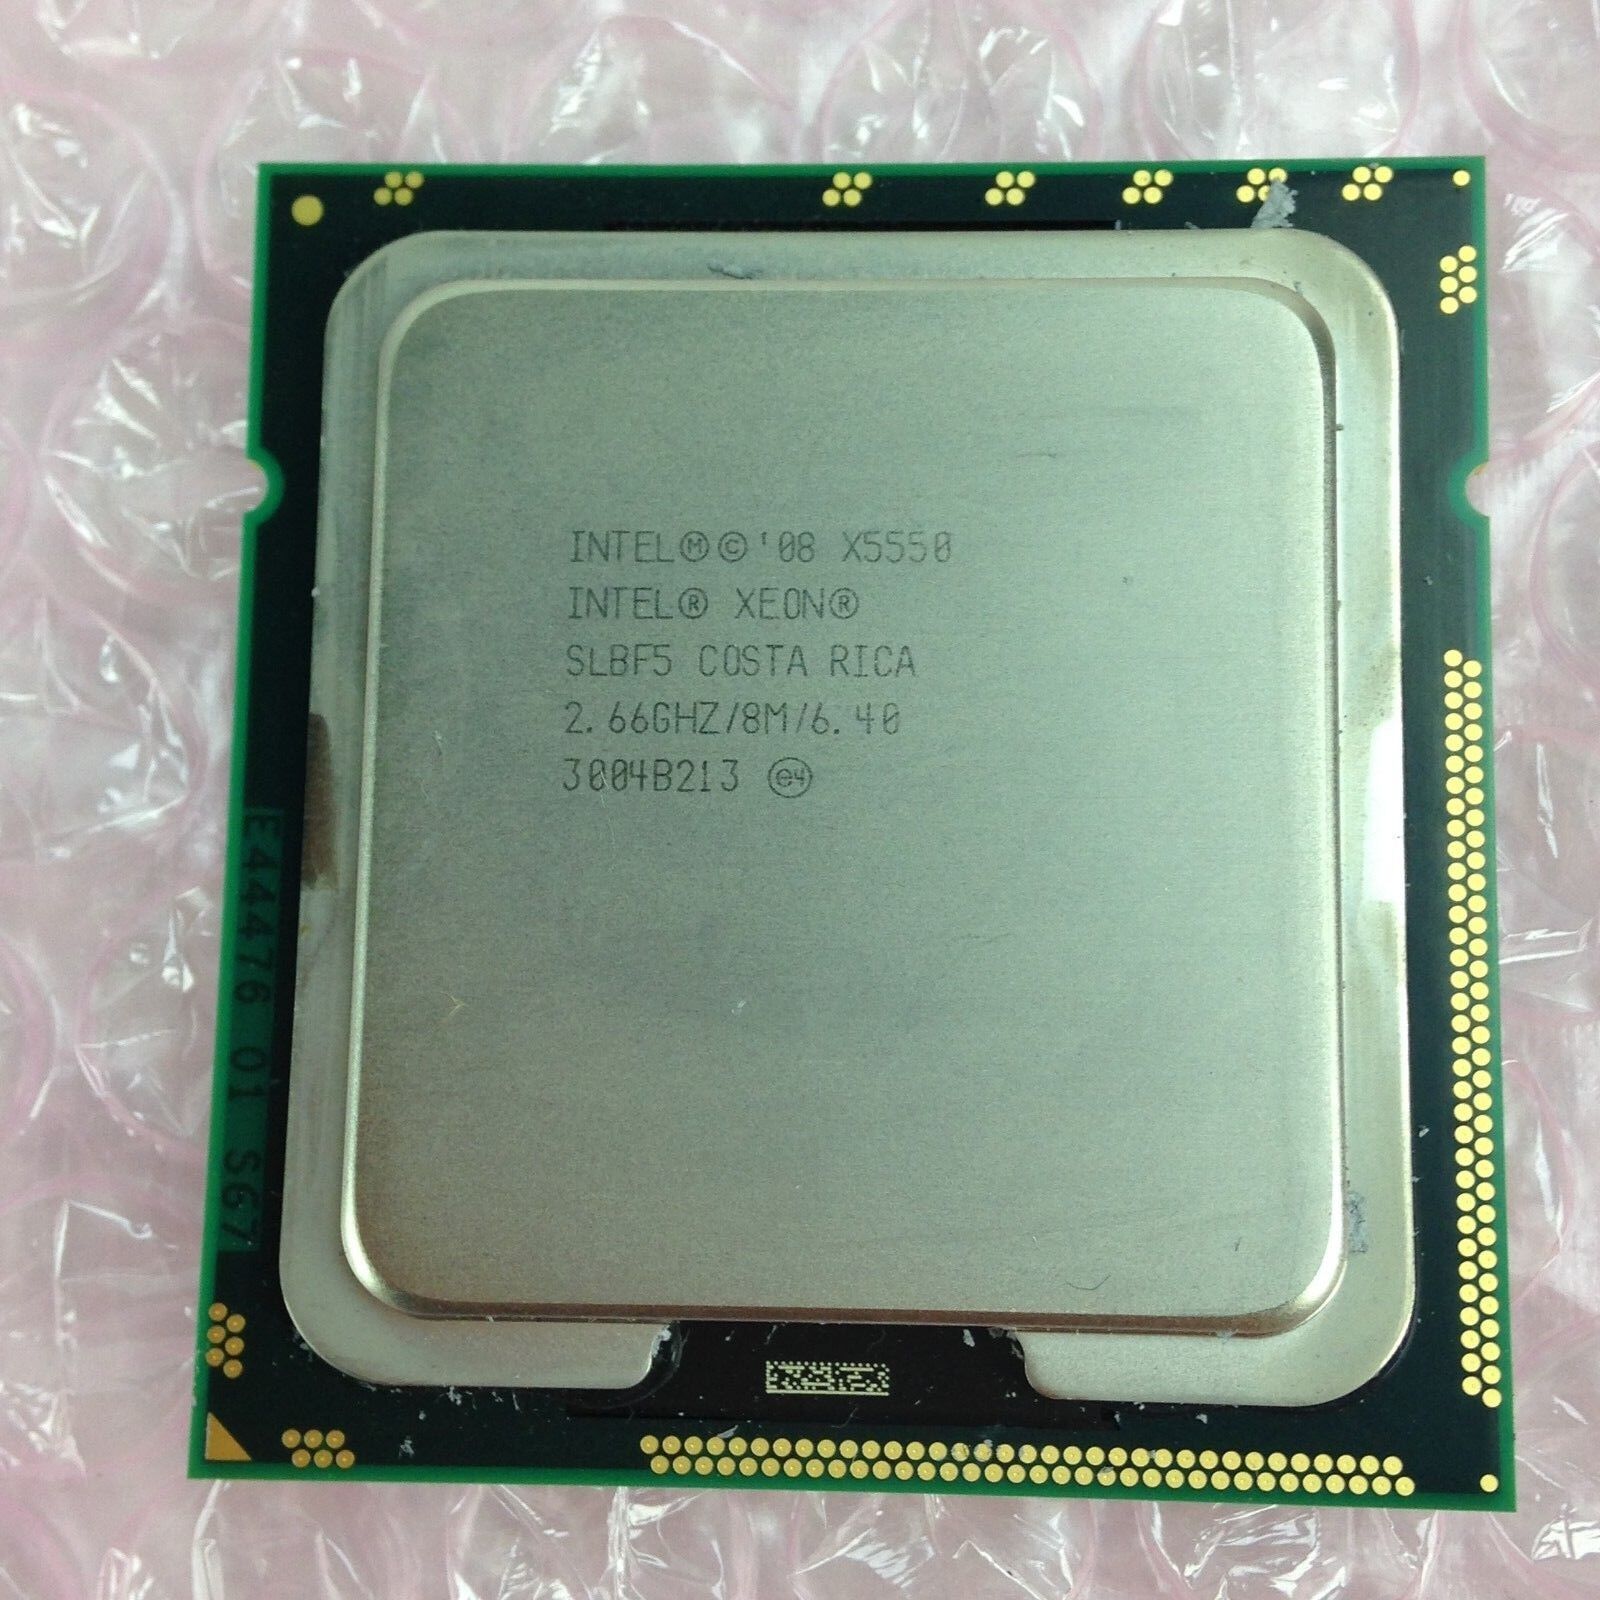 Intel Xeon X5550 CPU SLBF5 2.66 GHz LGA 1366 Quad Core Processor Lot of (10)